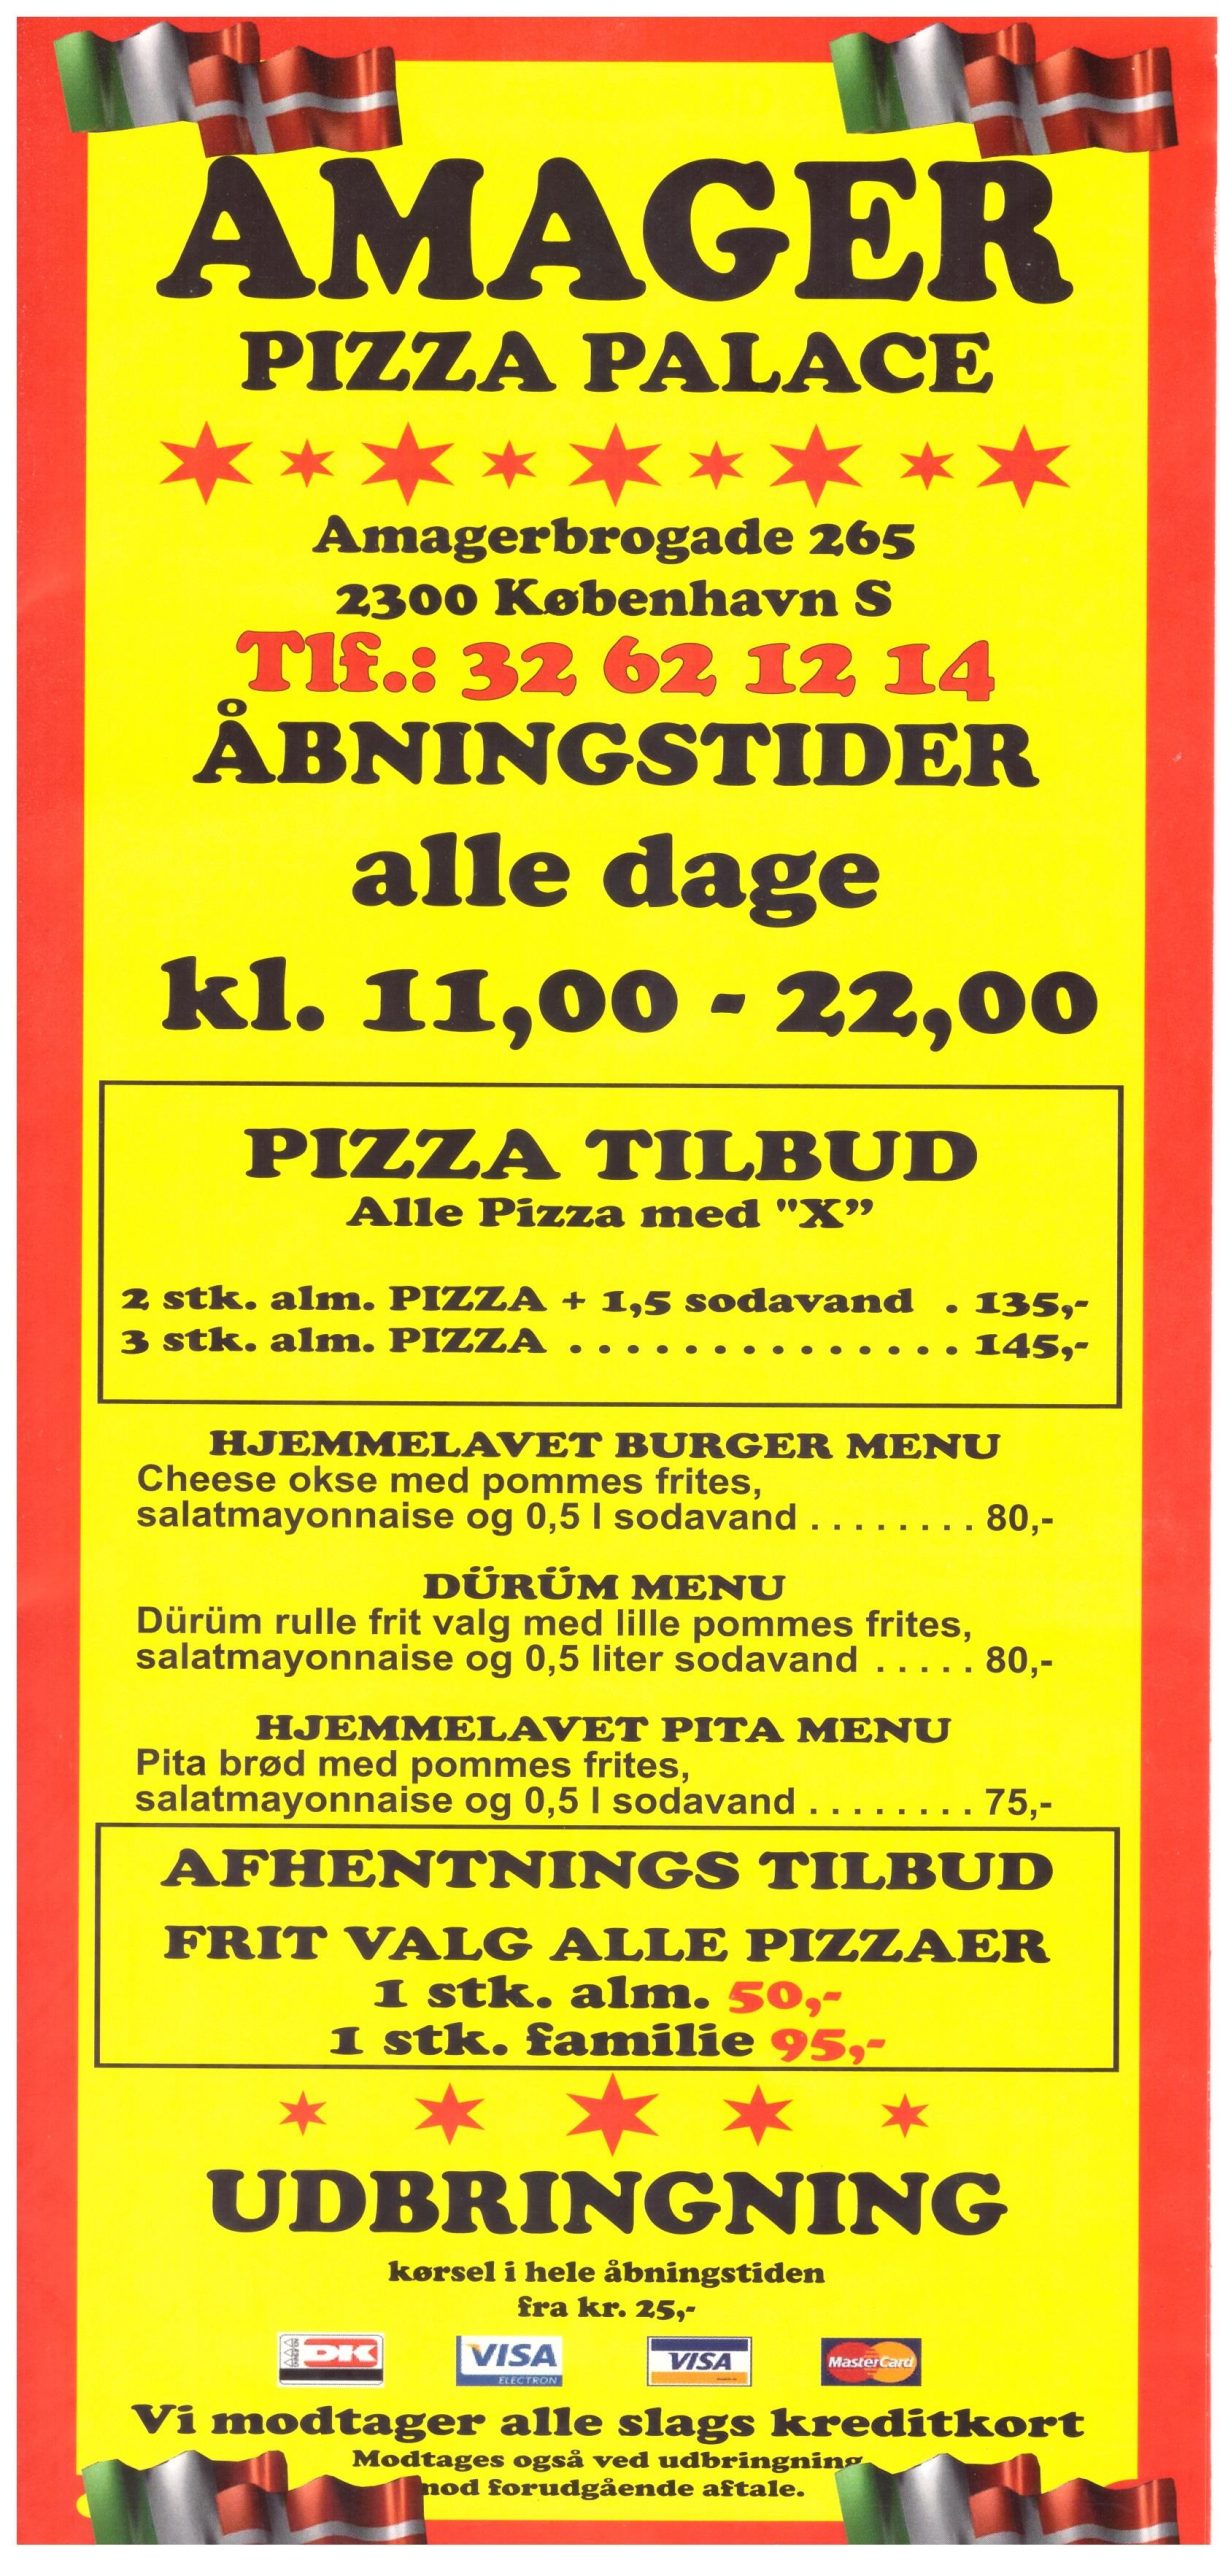 Amager Pizza Palace – Amagerbrogade 265 – 2300 københavn S.